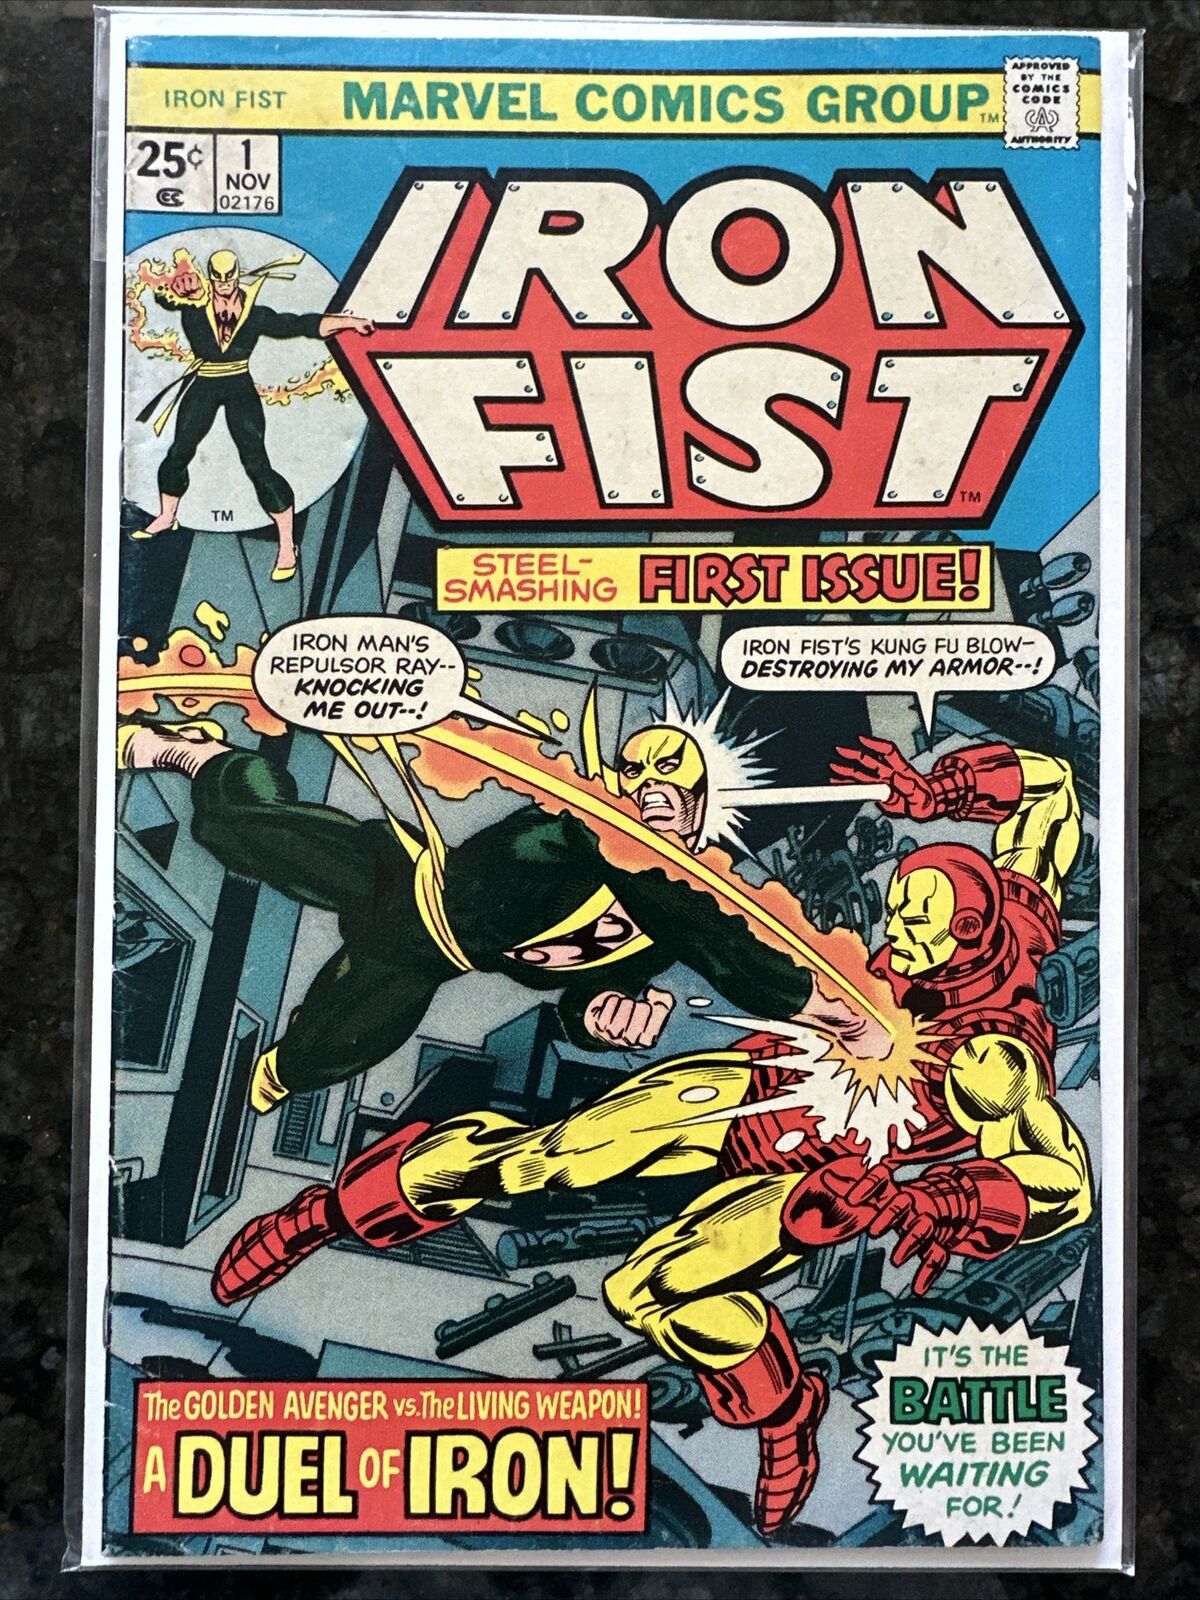 Iron Fist #1 1975 Key Marvel Comic Book 1st Iron Fist Solo Title / Series